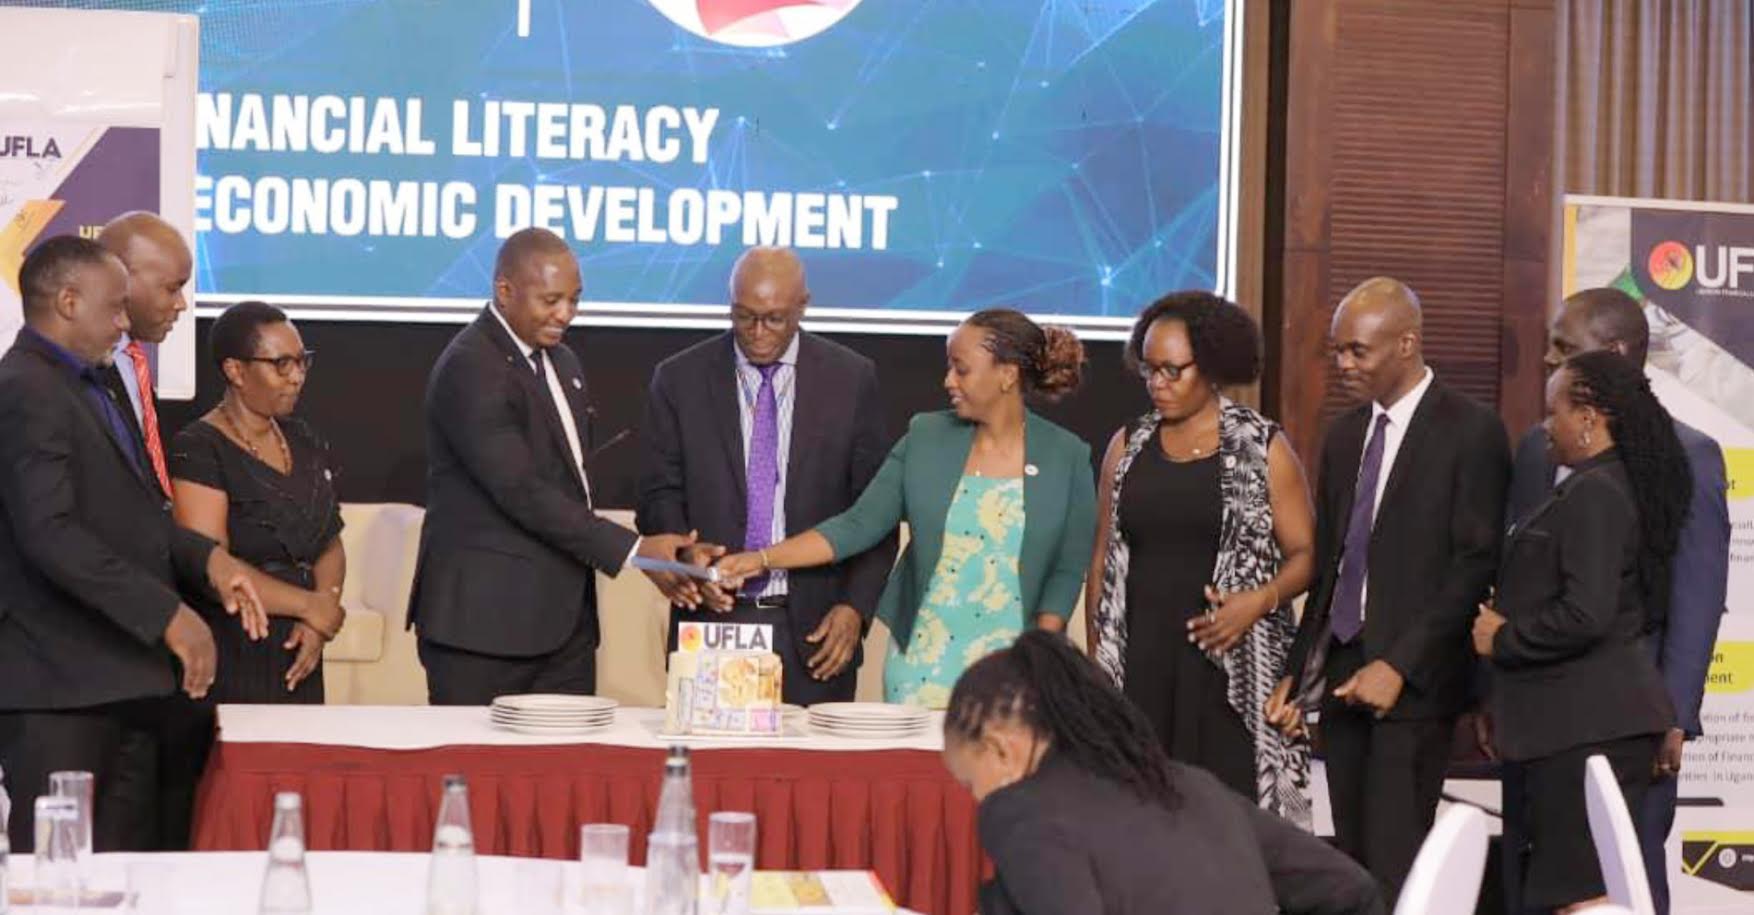 Financial literacy still lacking in Uganda, says UFLA